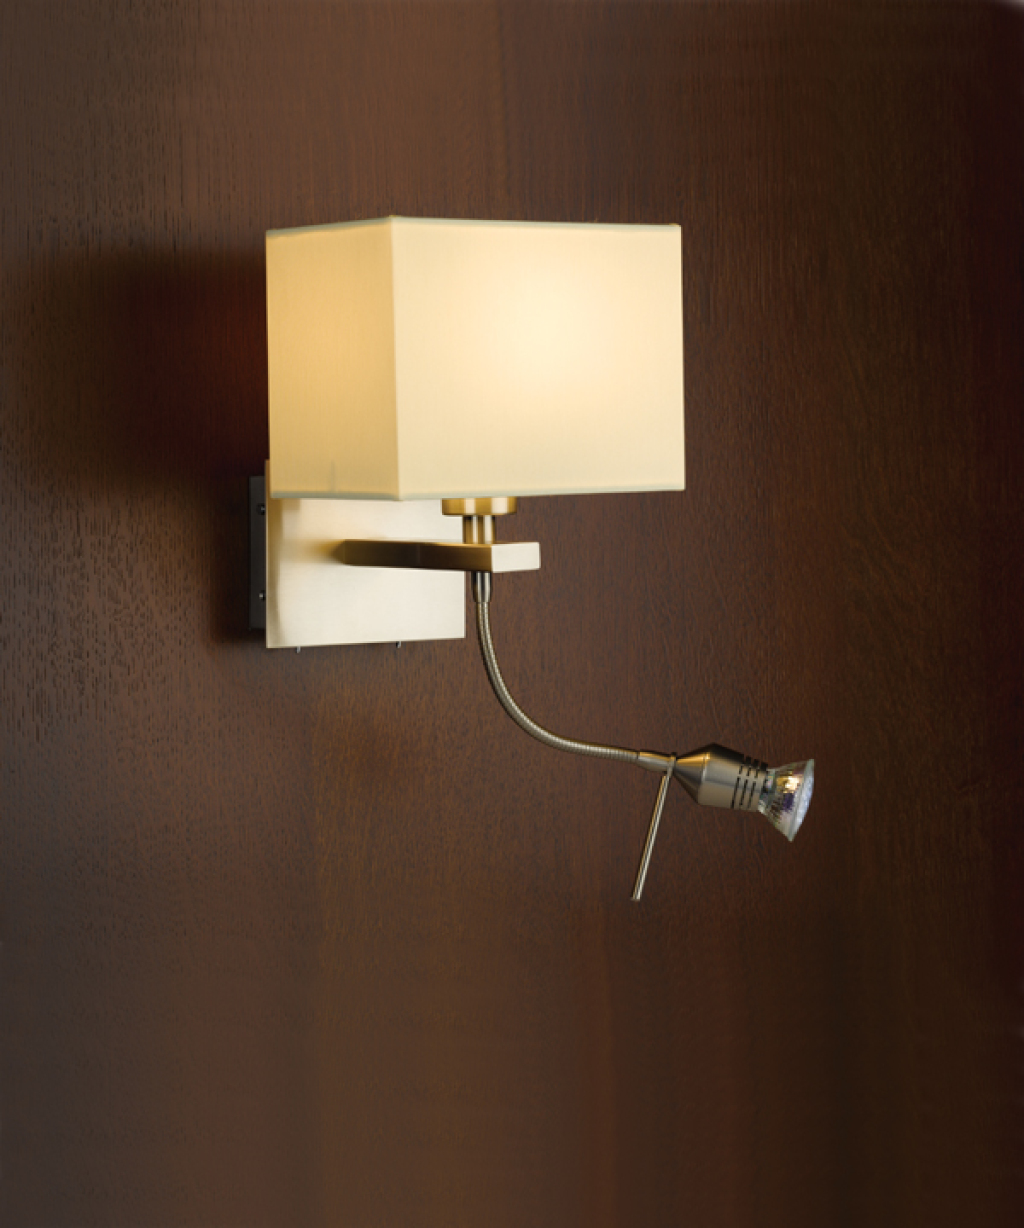 Bedroom Bedside Lamps: Illuminating The Night